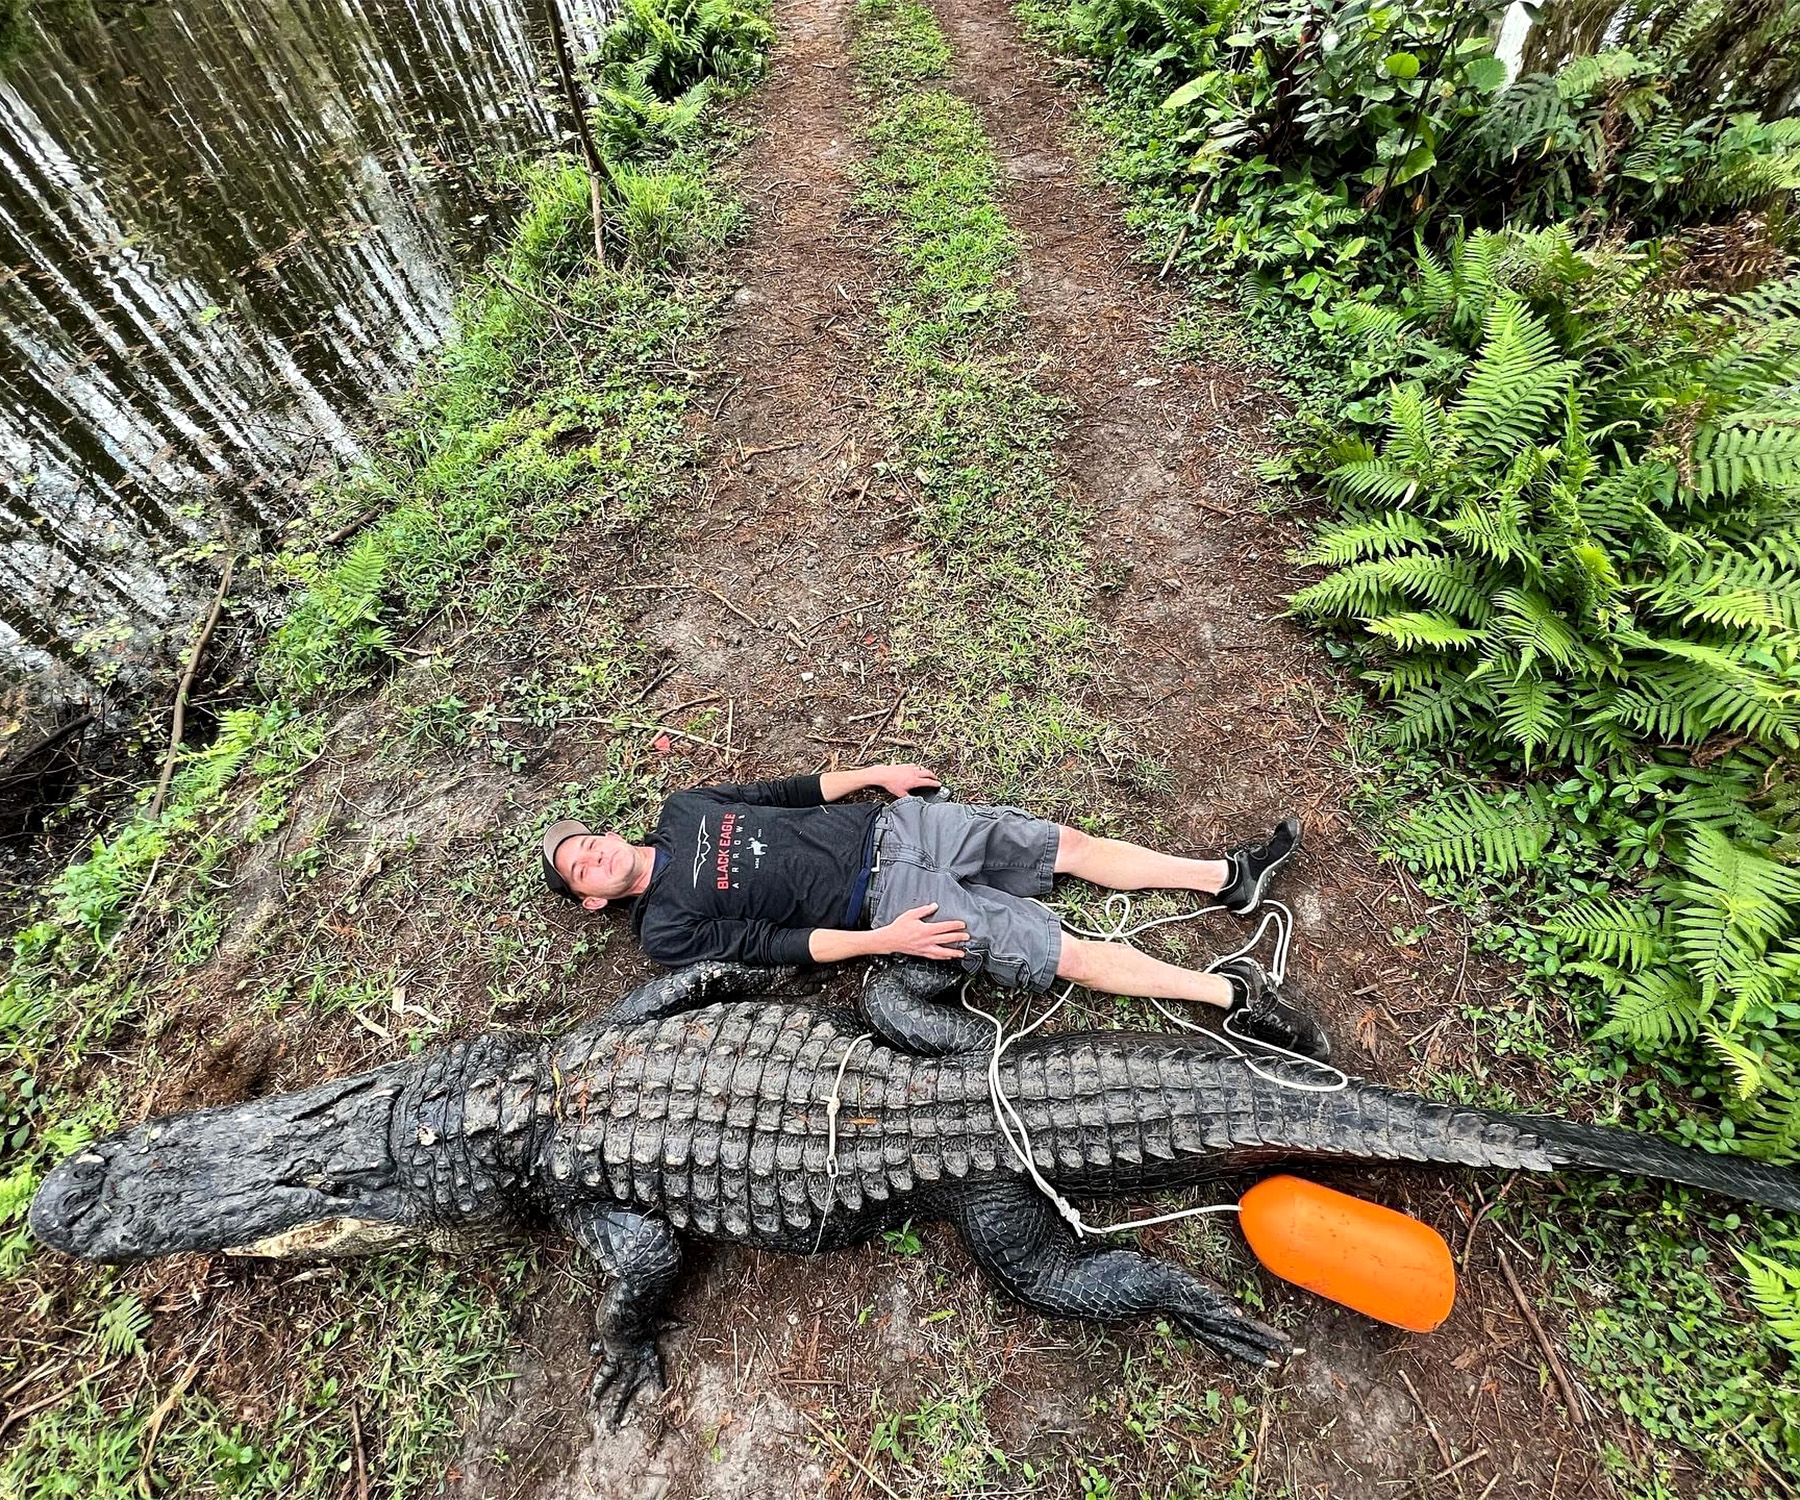 alligator twice his size 4